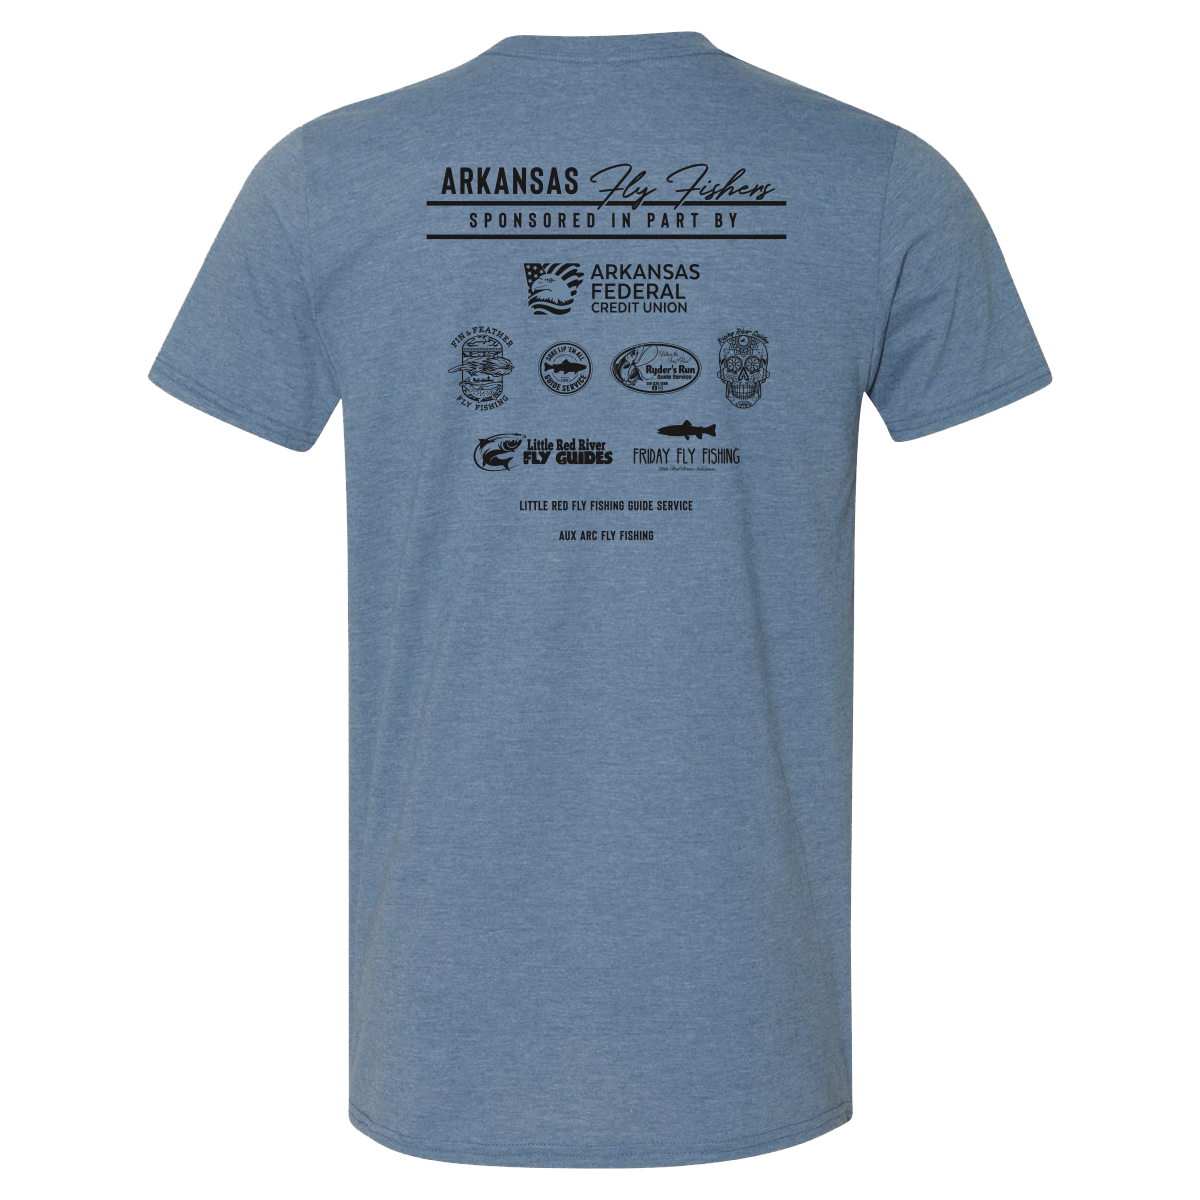 Samtykke Tag ud Underholde AFF Blue T-Shirt (L, XL, & 2XL) – Arkansas Fly Fishers